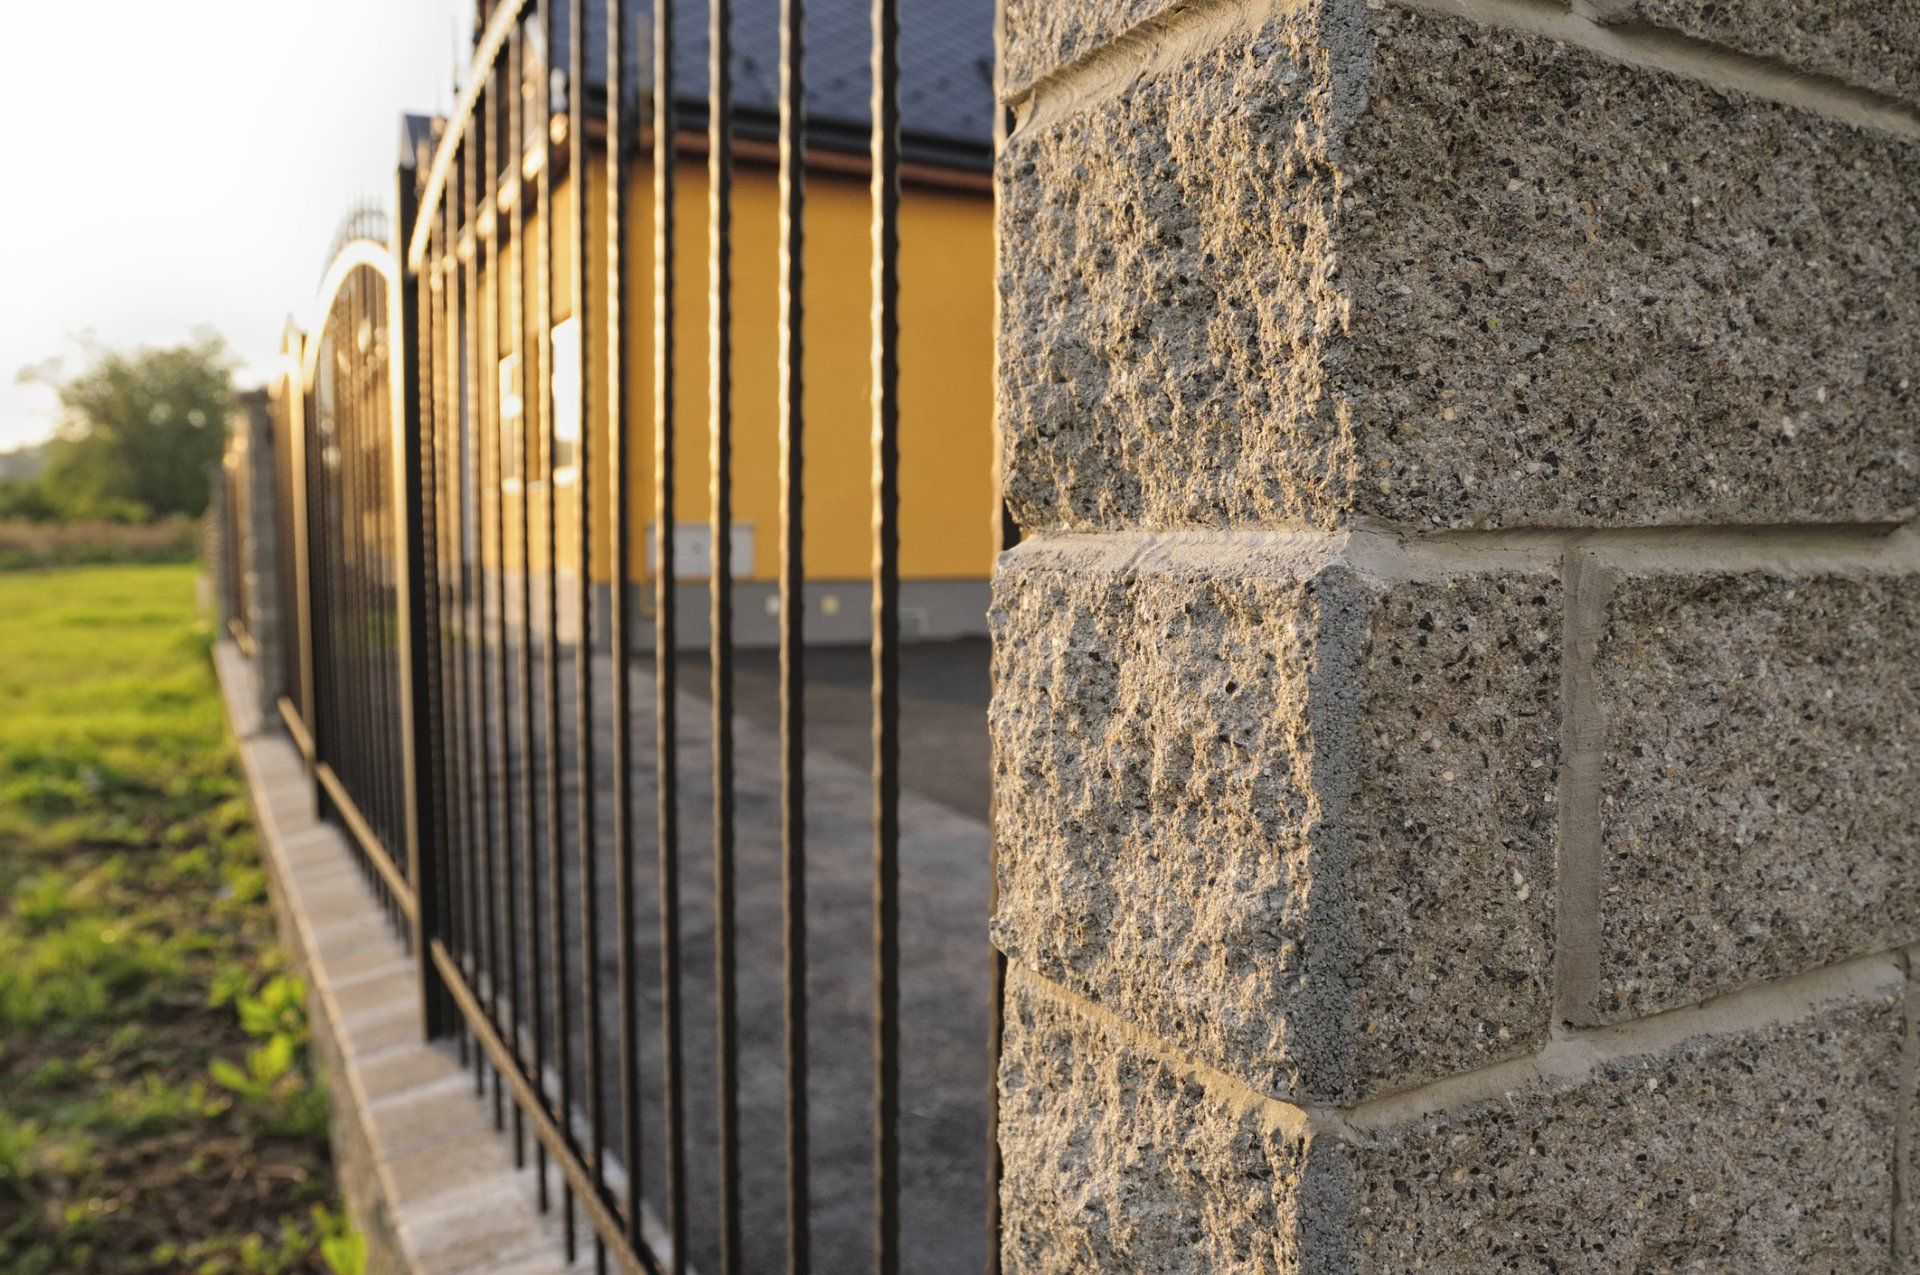 Iron Fence Ending With Concrete Blocks - Lancaster, CA - Sav-On Fence Co.